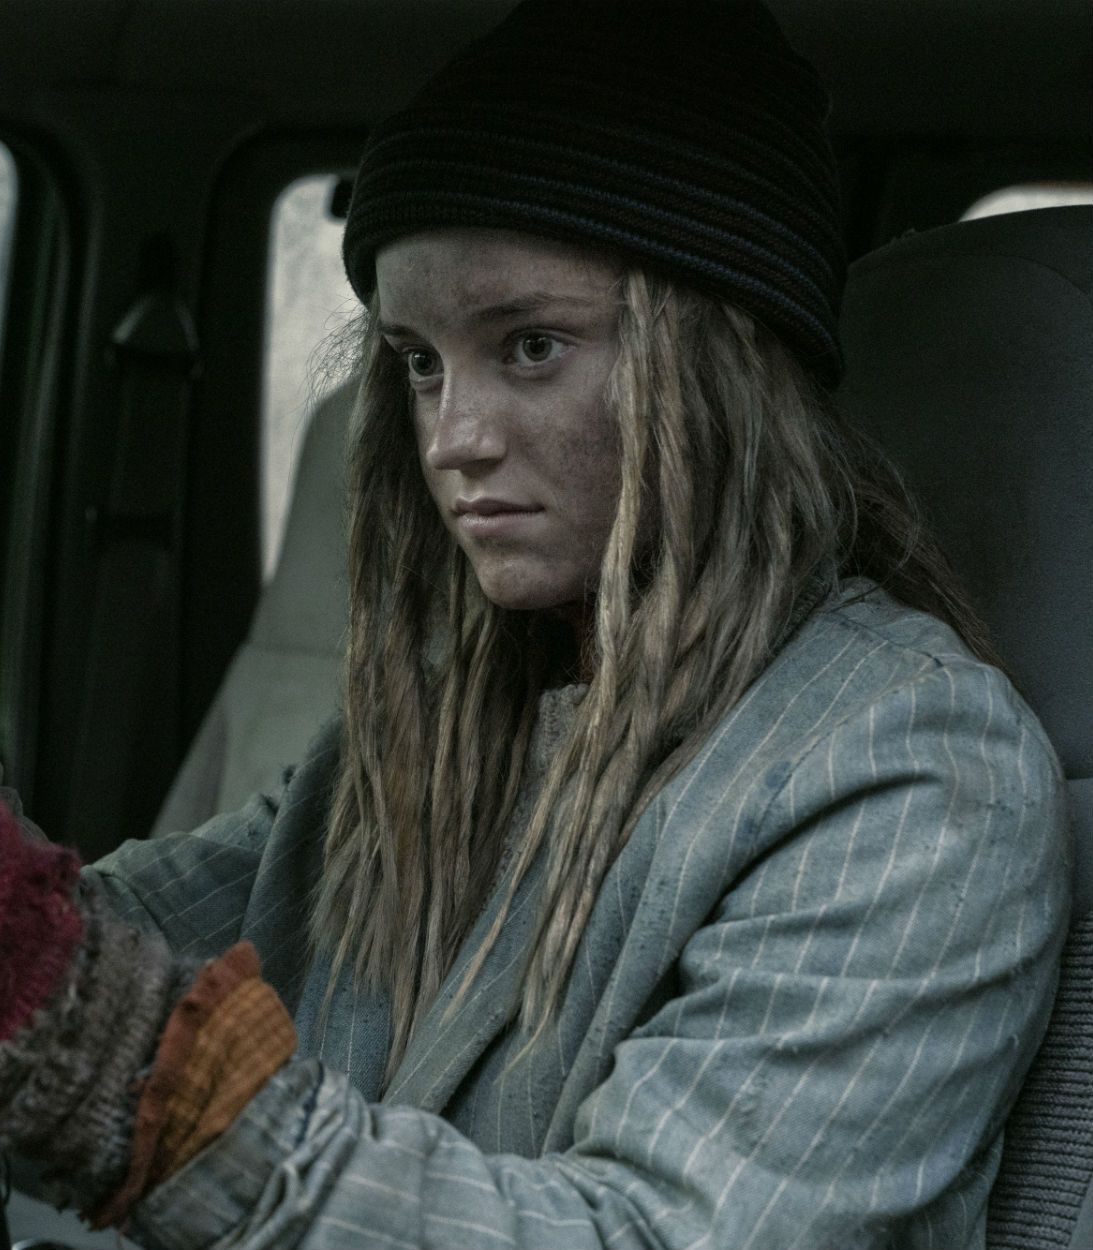 Bailey Gavulic as Annie in Fear the Walking Dead Vertical